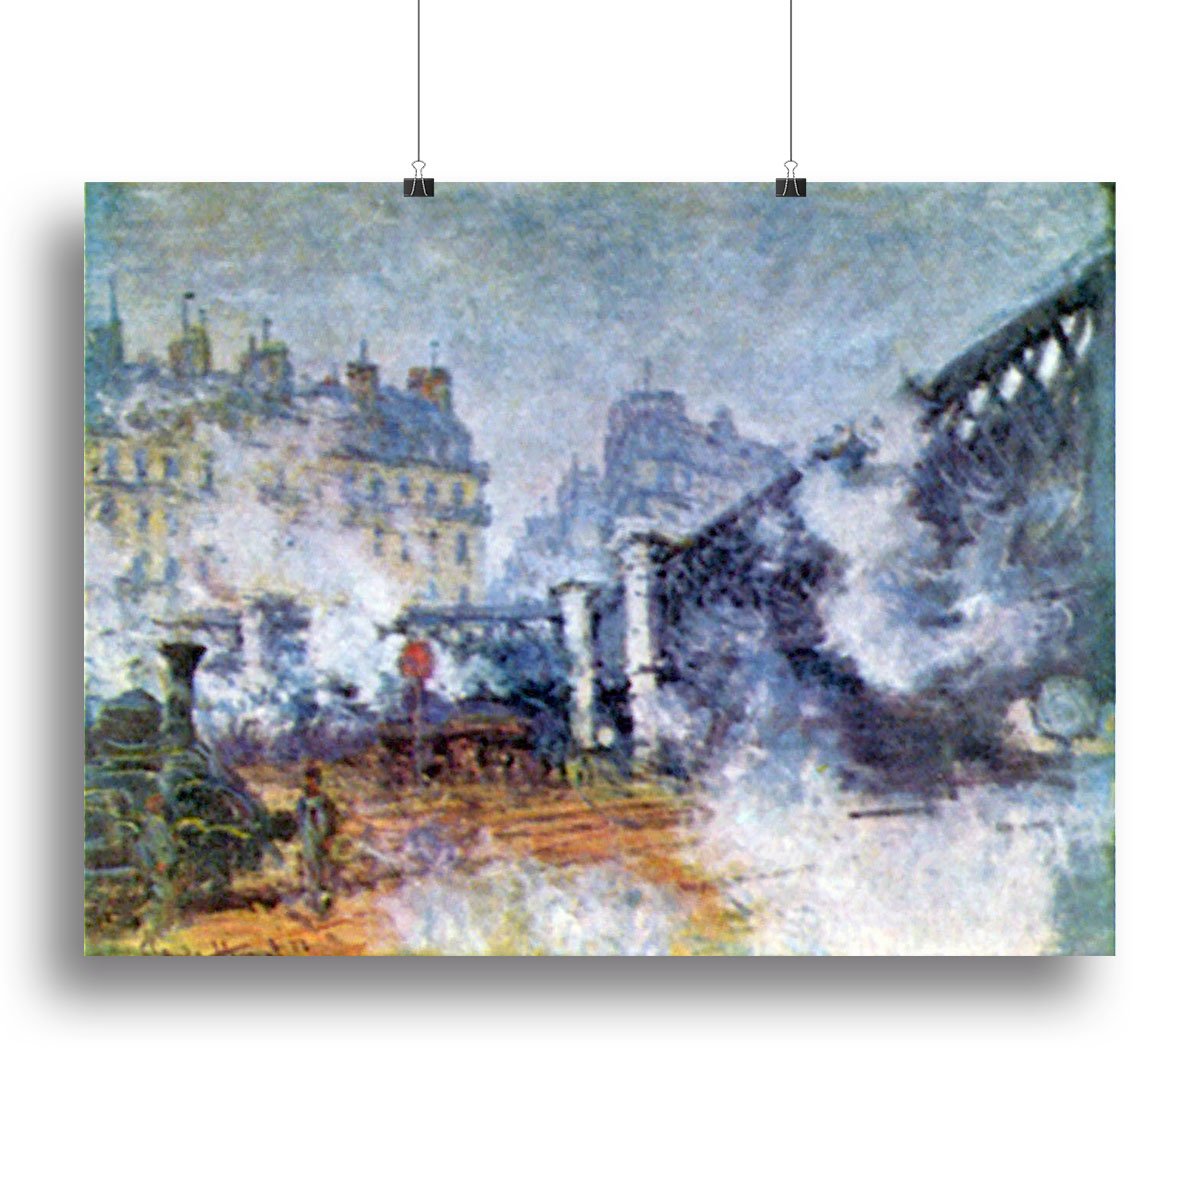 The Europe Bridge Saint Lazare station in Paris by Monet Canvas Print or Poster